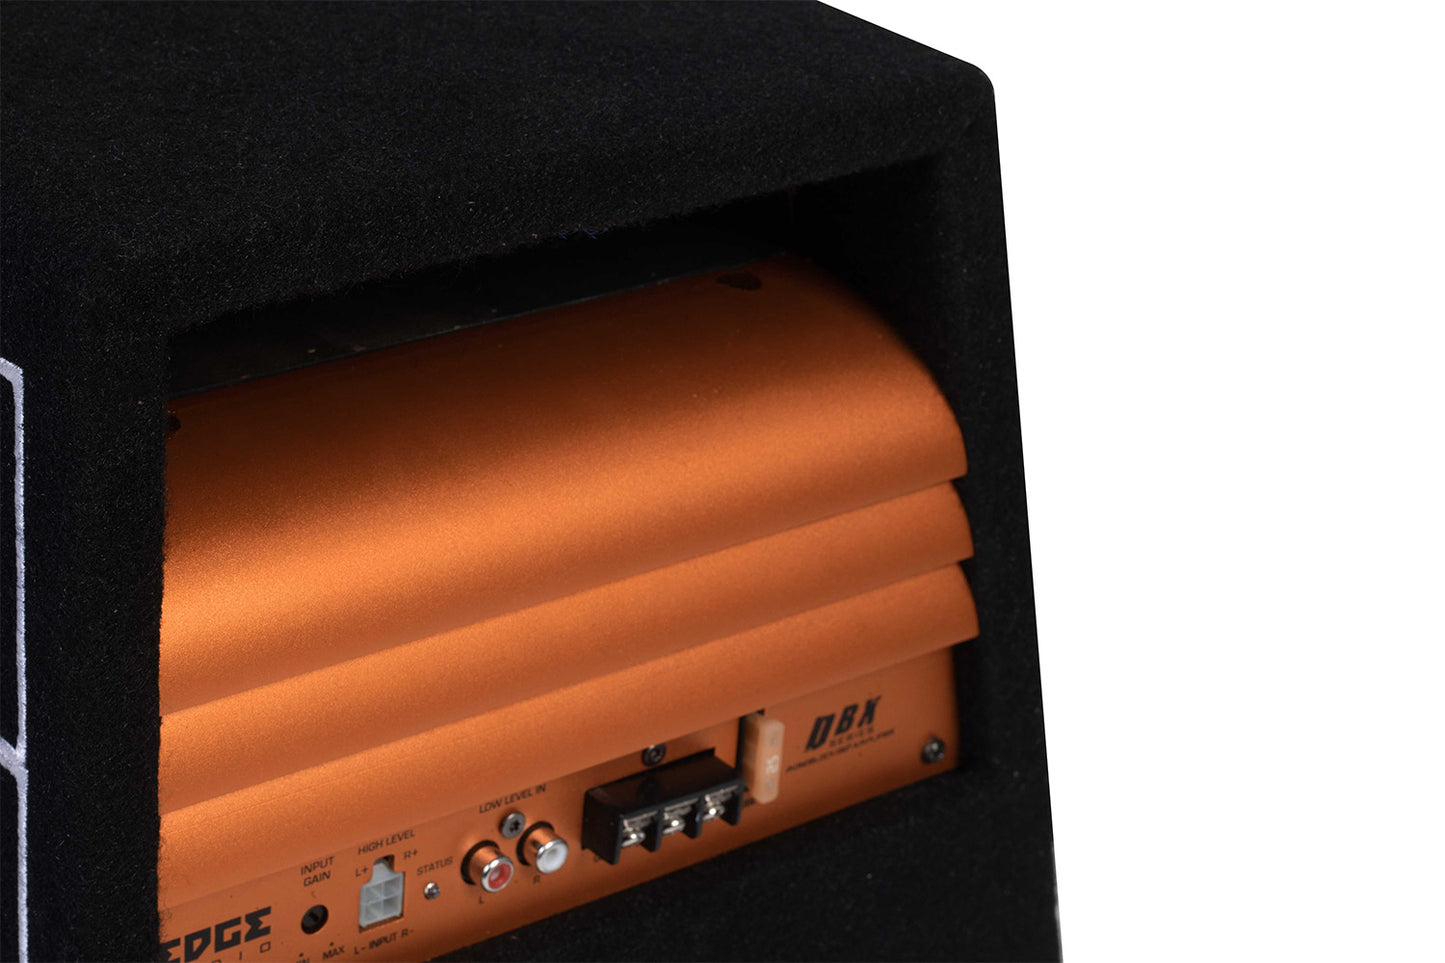 EDBX12TADSP-E3 | EDGE DBX Series Twin 12 inch 2400 watts Active Bass Enclosure DSP